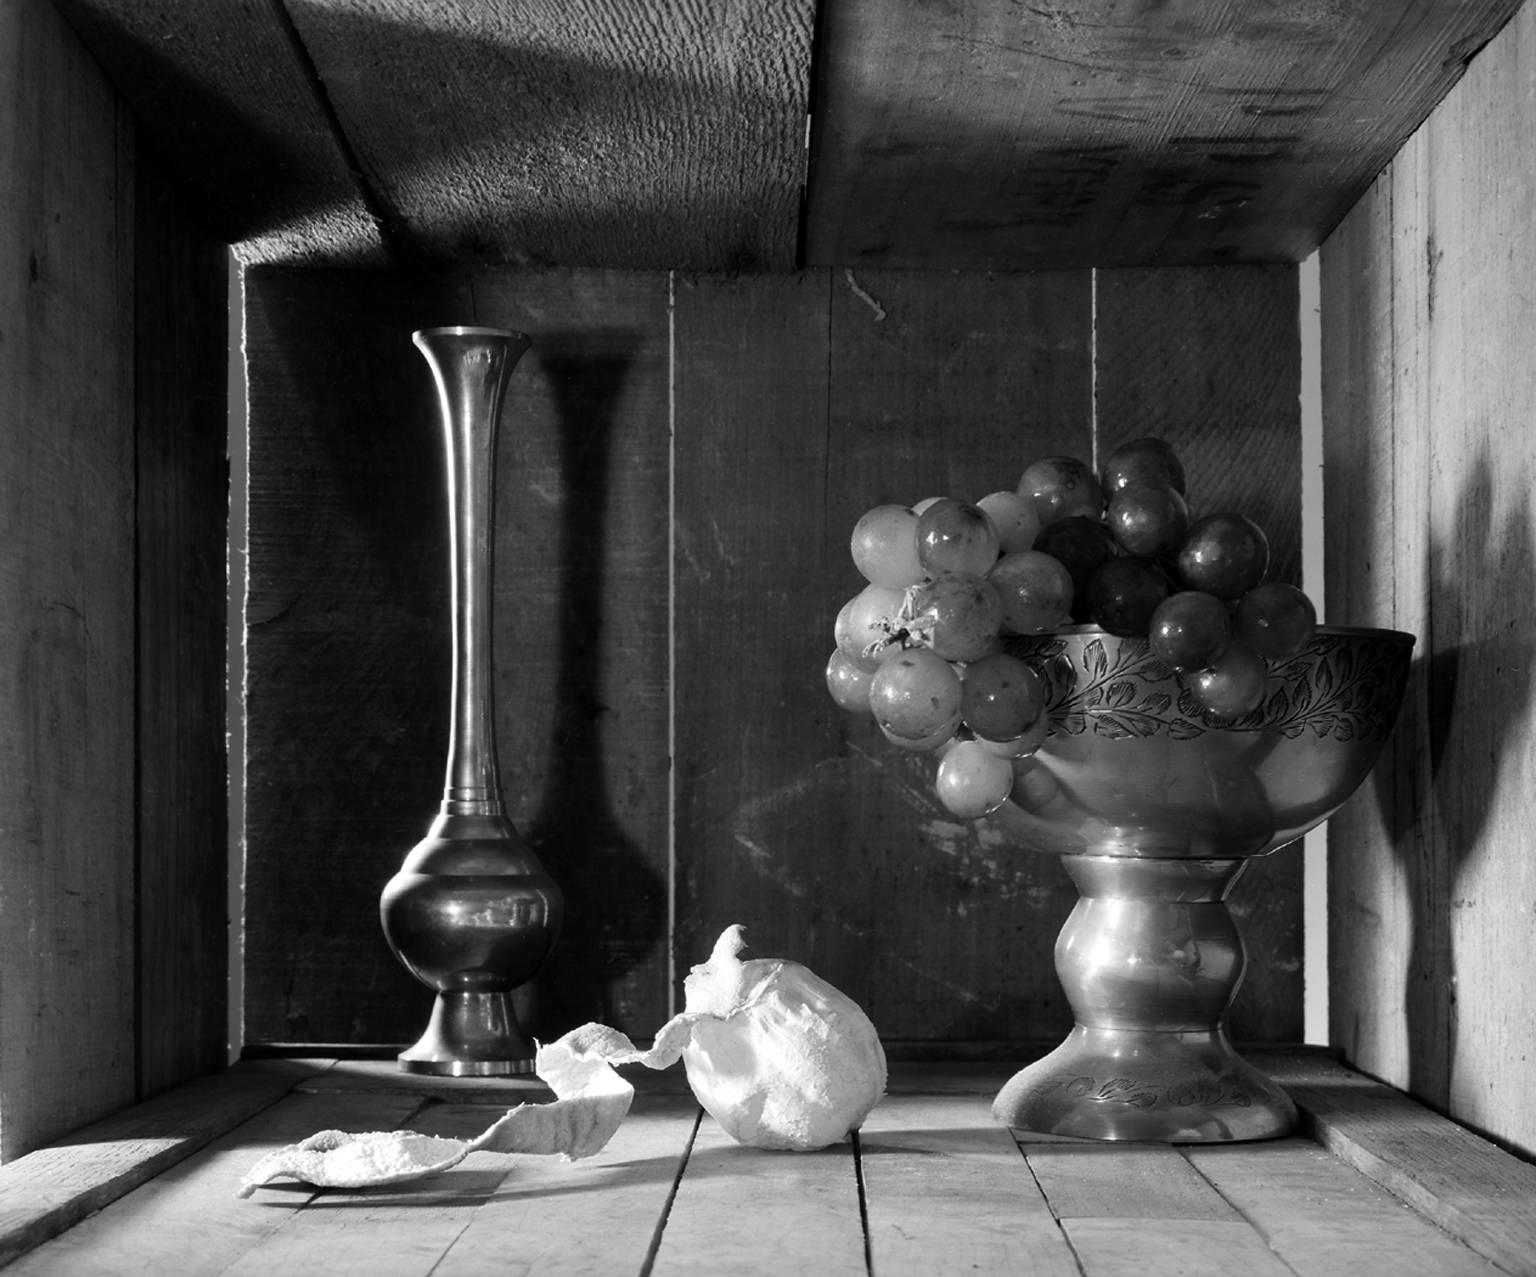 Howard Nathenson Black and White Photograph - "Peeling Lemon, Grapes", black and white still life photograph digitally printed